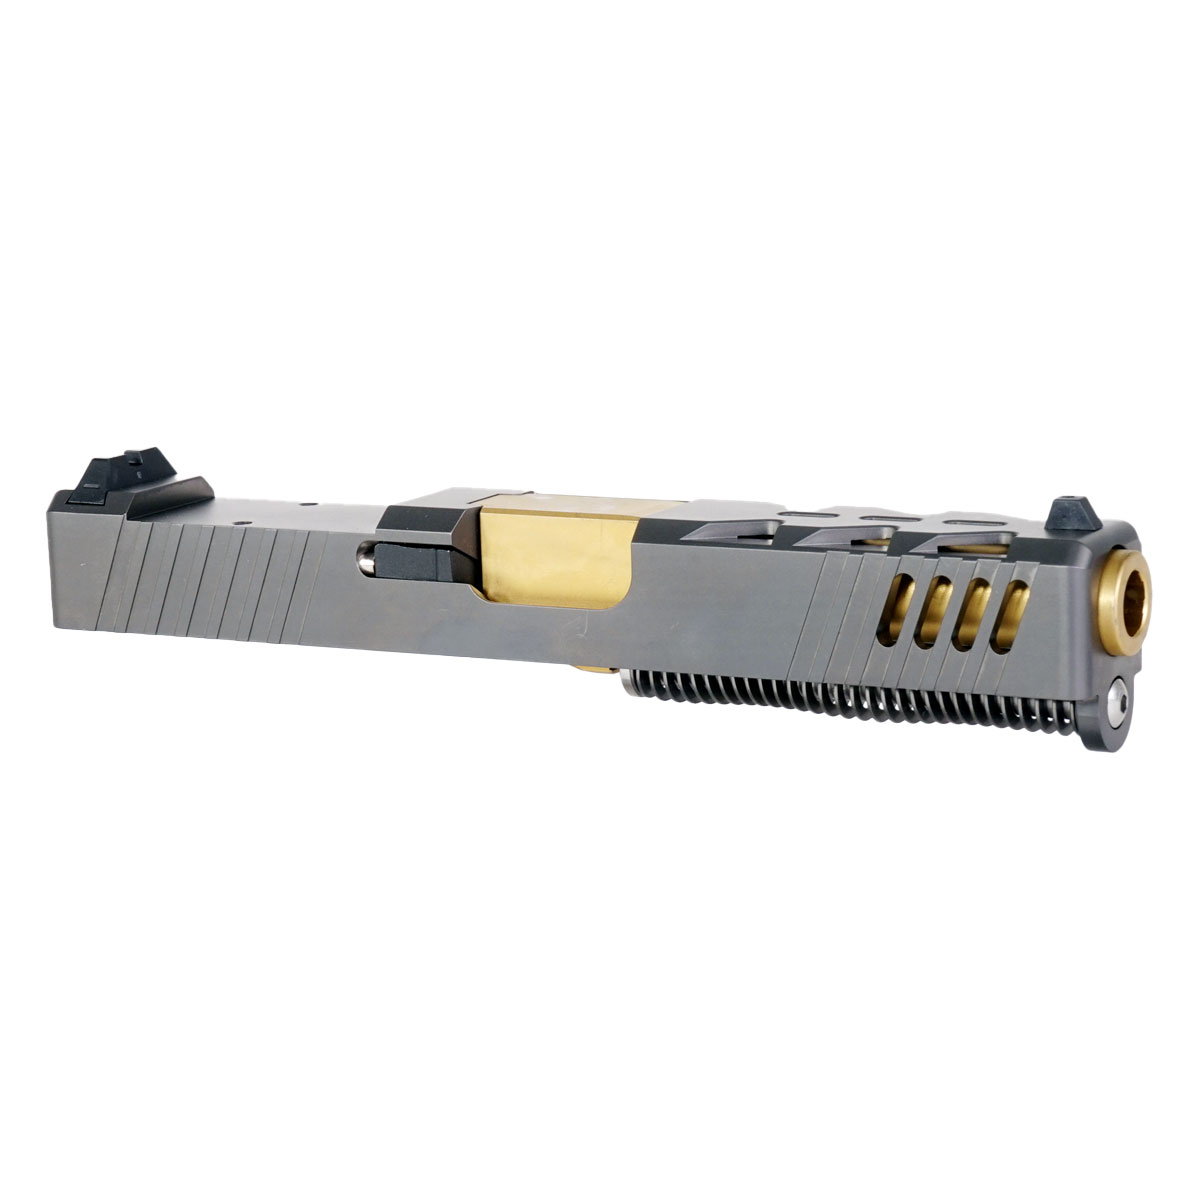 DDS 'The Talon' 9mm Complete Slide Kit - Glock 19 Gen 1-3 Compatible